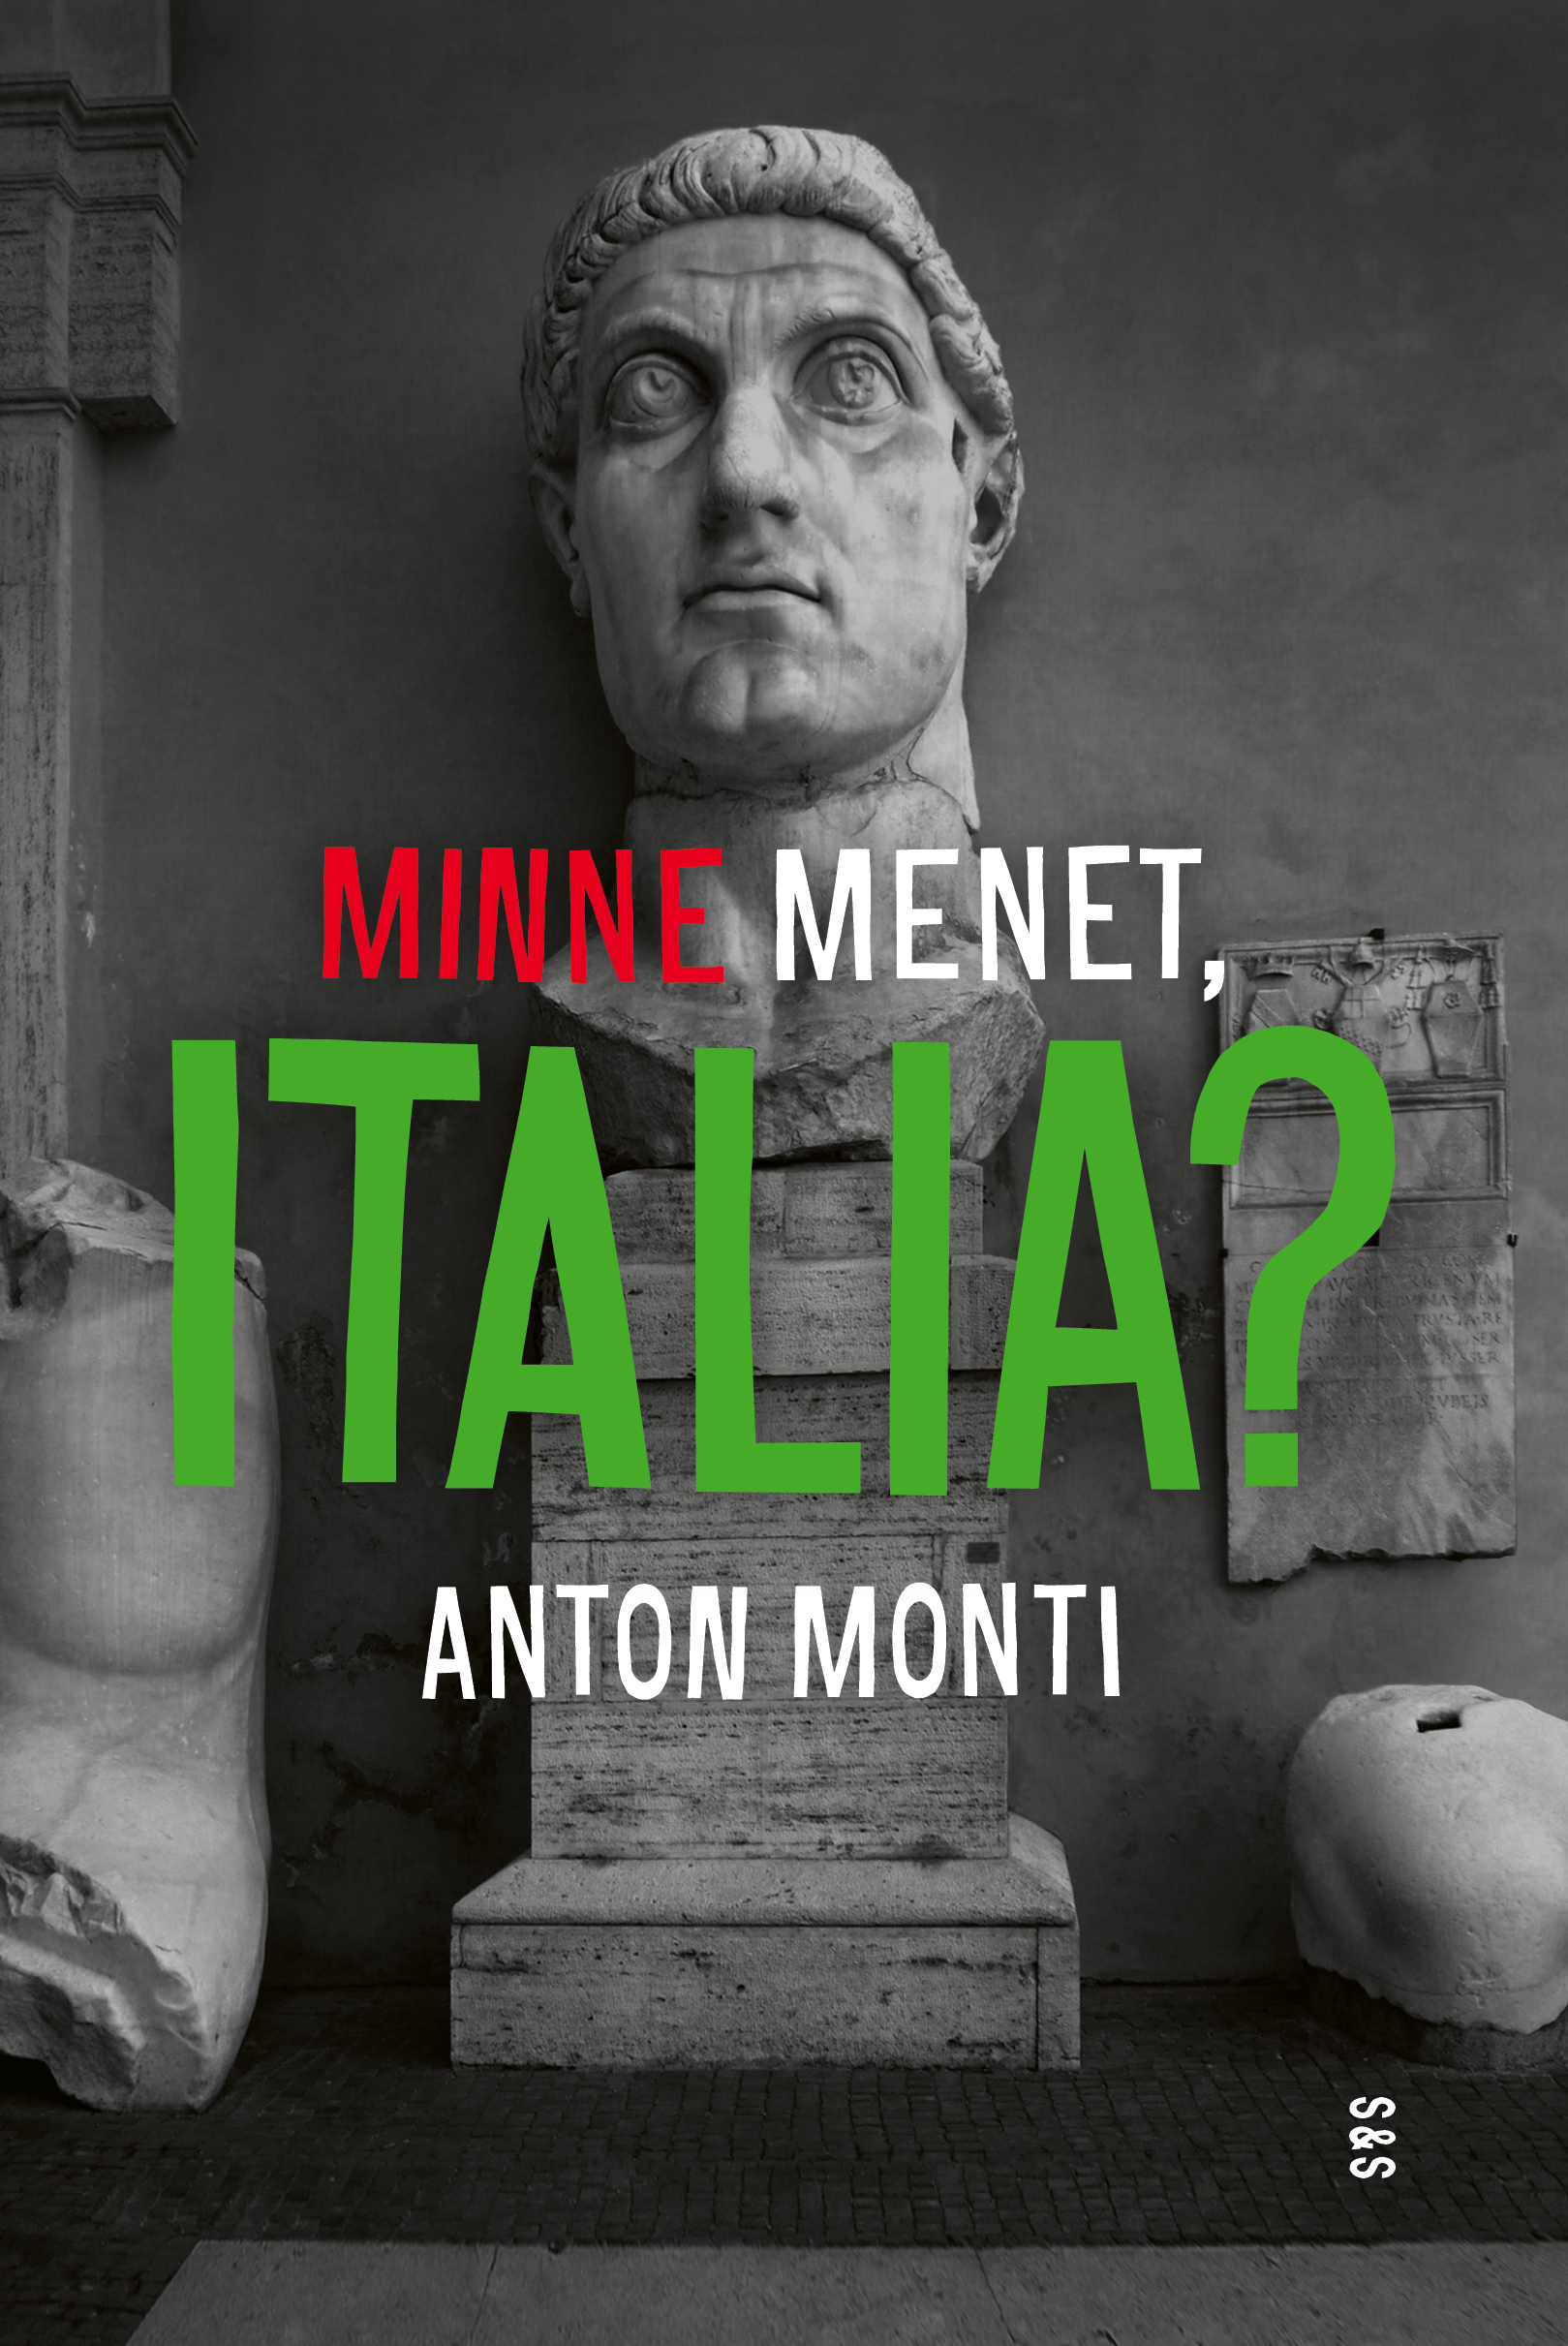 Monti, Anton - Minne menet, Italia?, e-bok